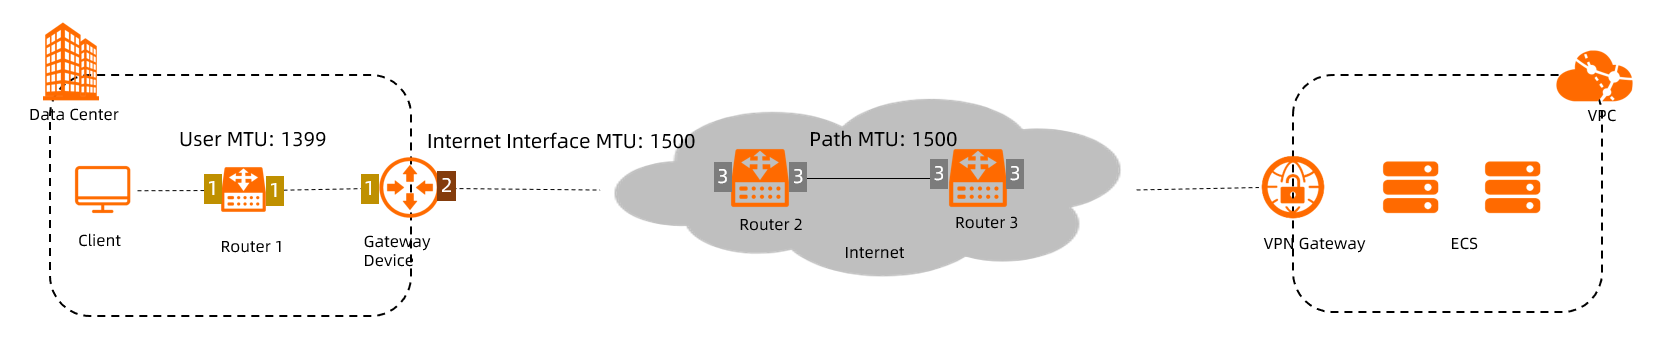 What MTU should I use VPN?